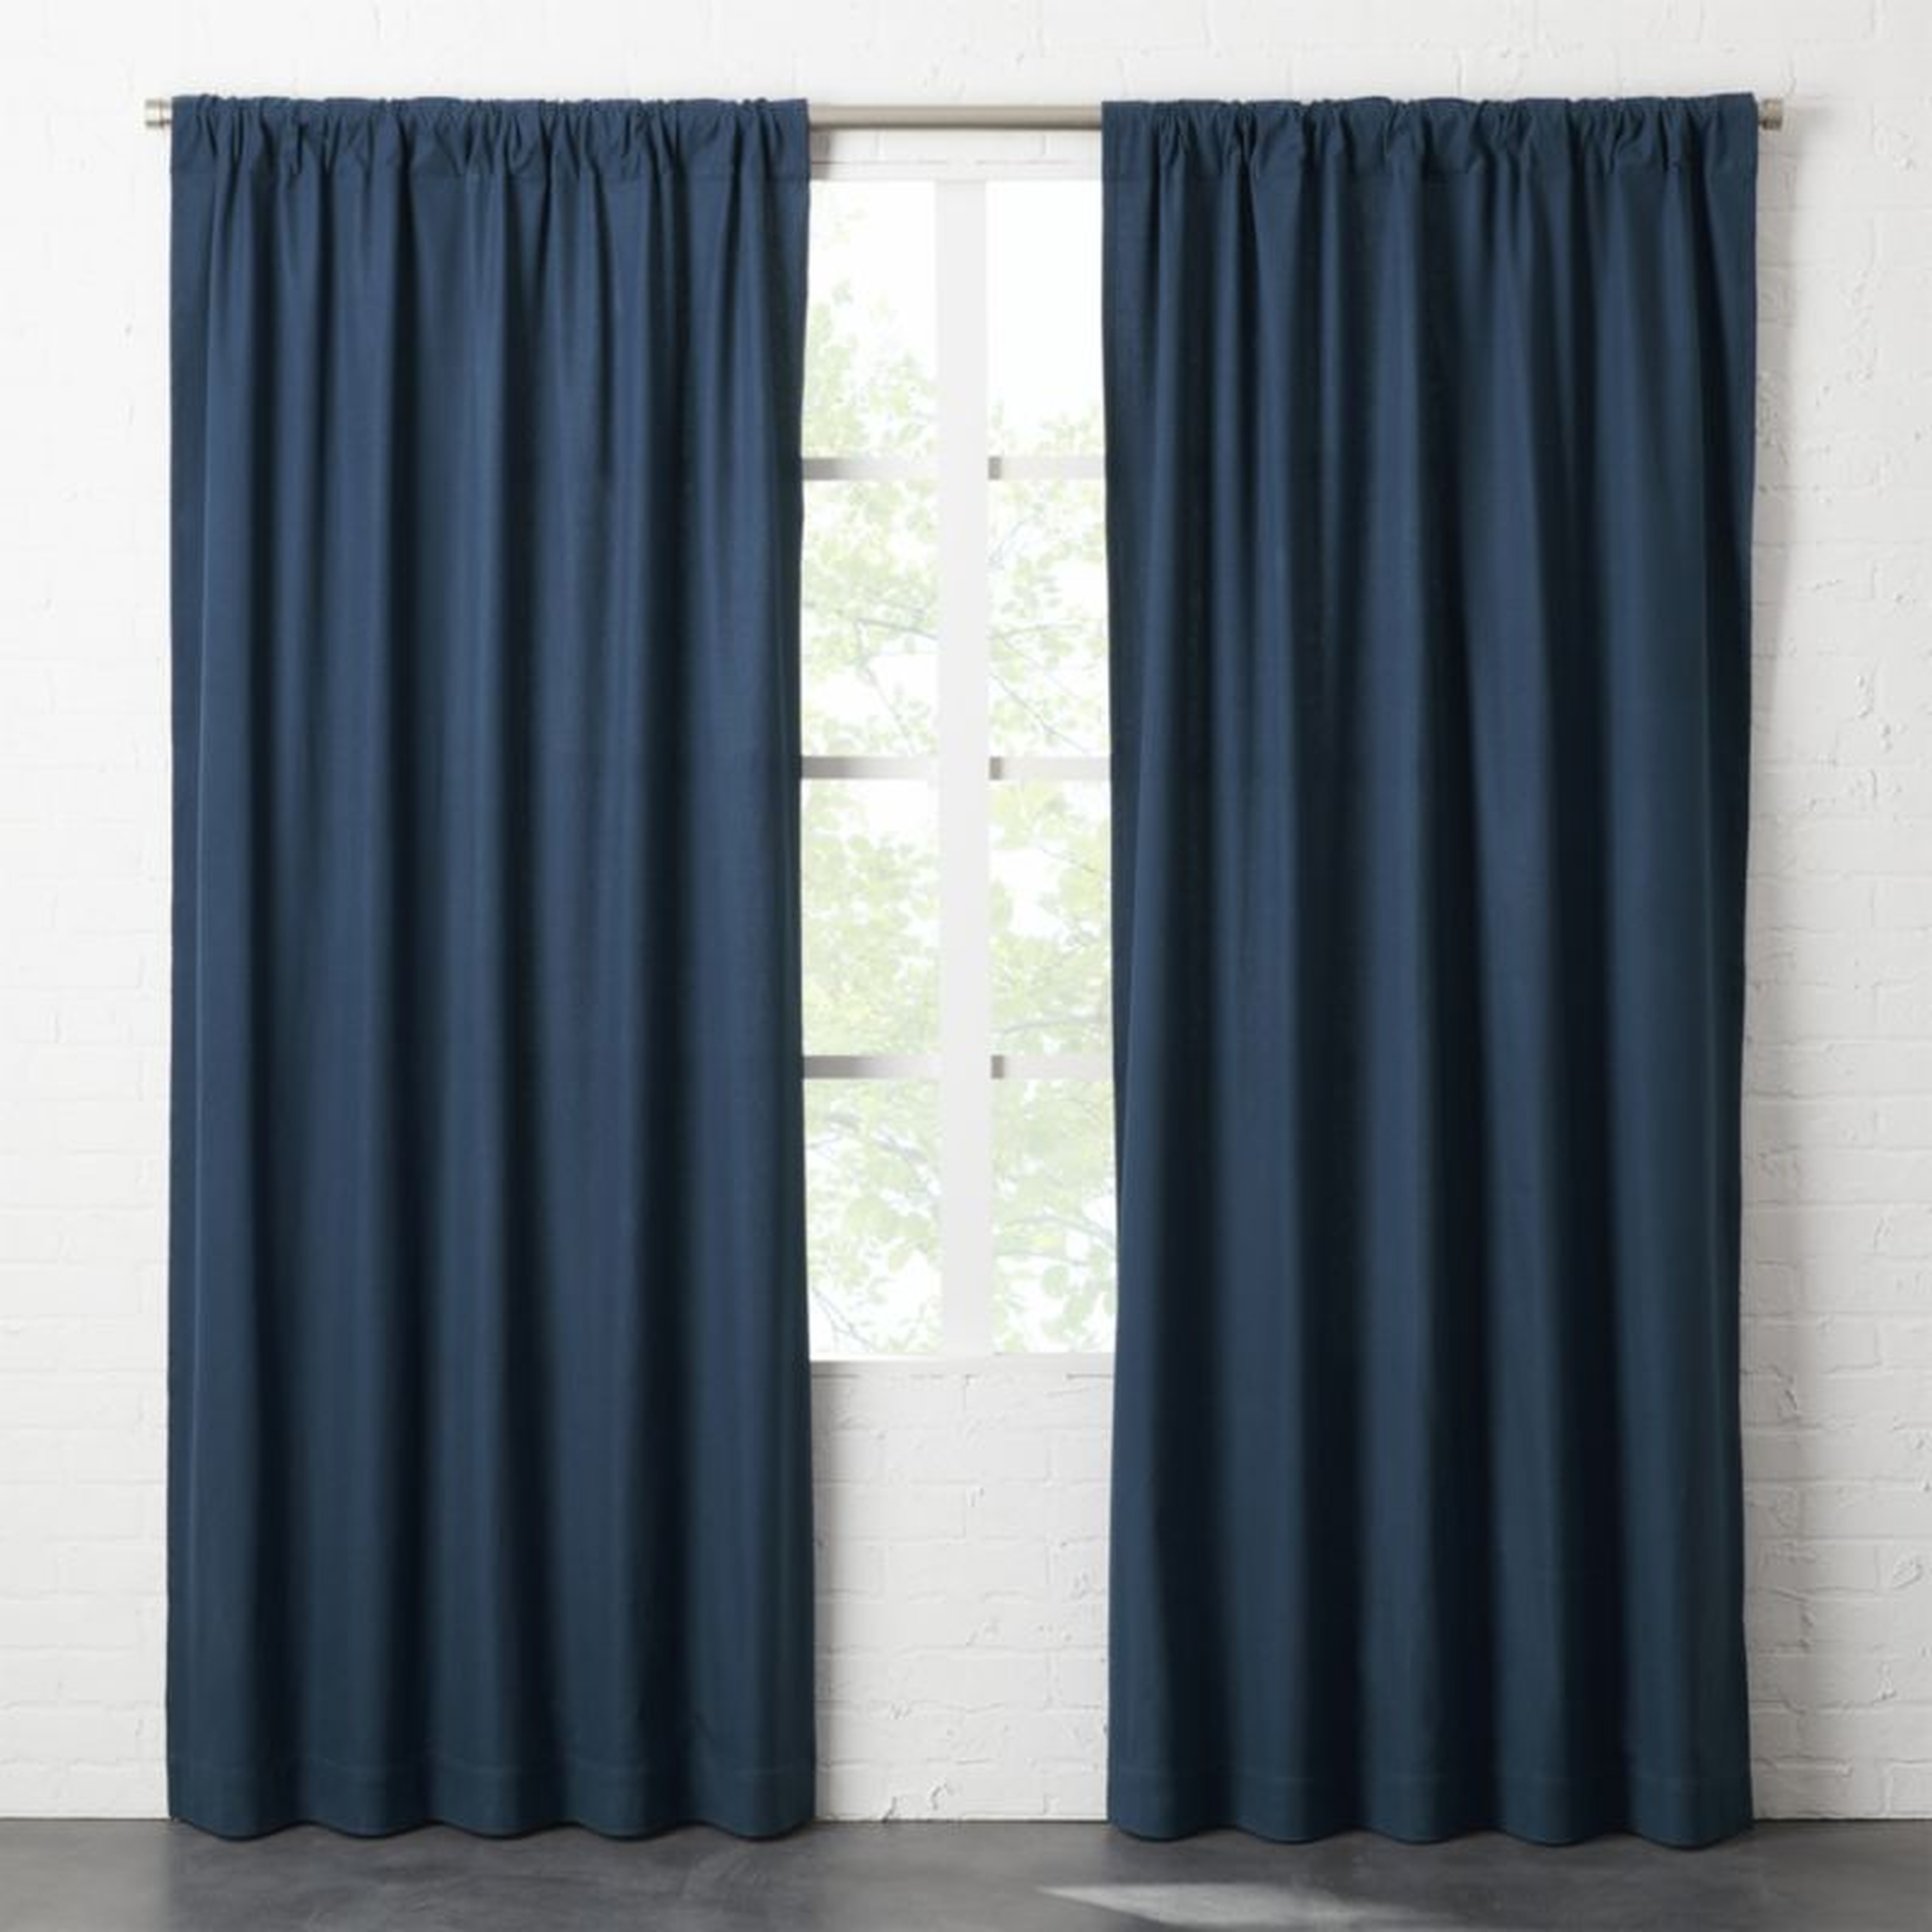 "Navy Blue Basketweave II Curtain Panel 48""x96""" - CB2